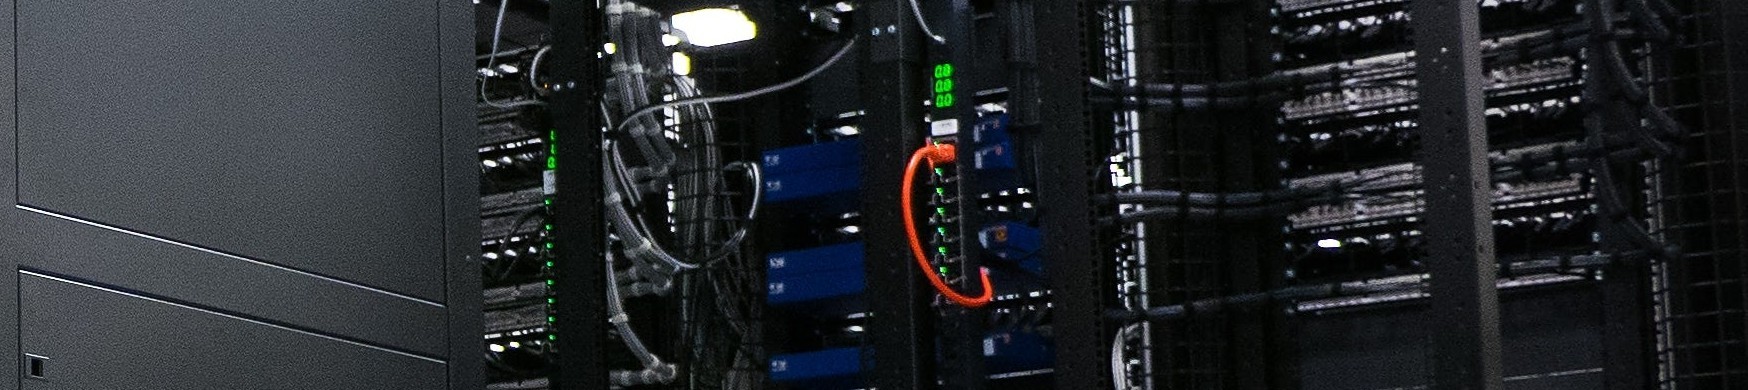 A server rack.